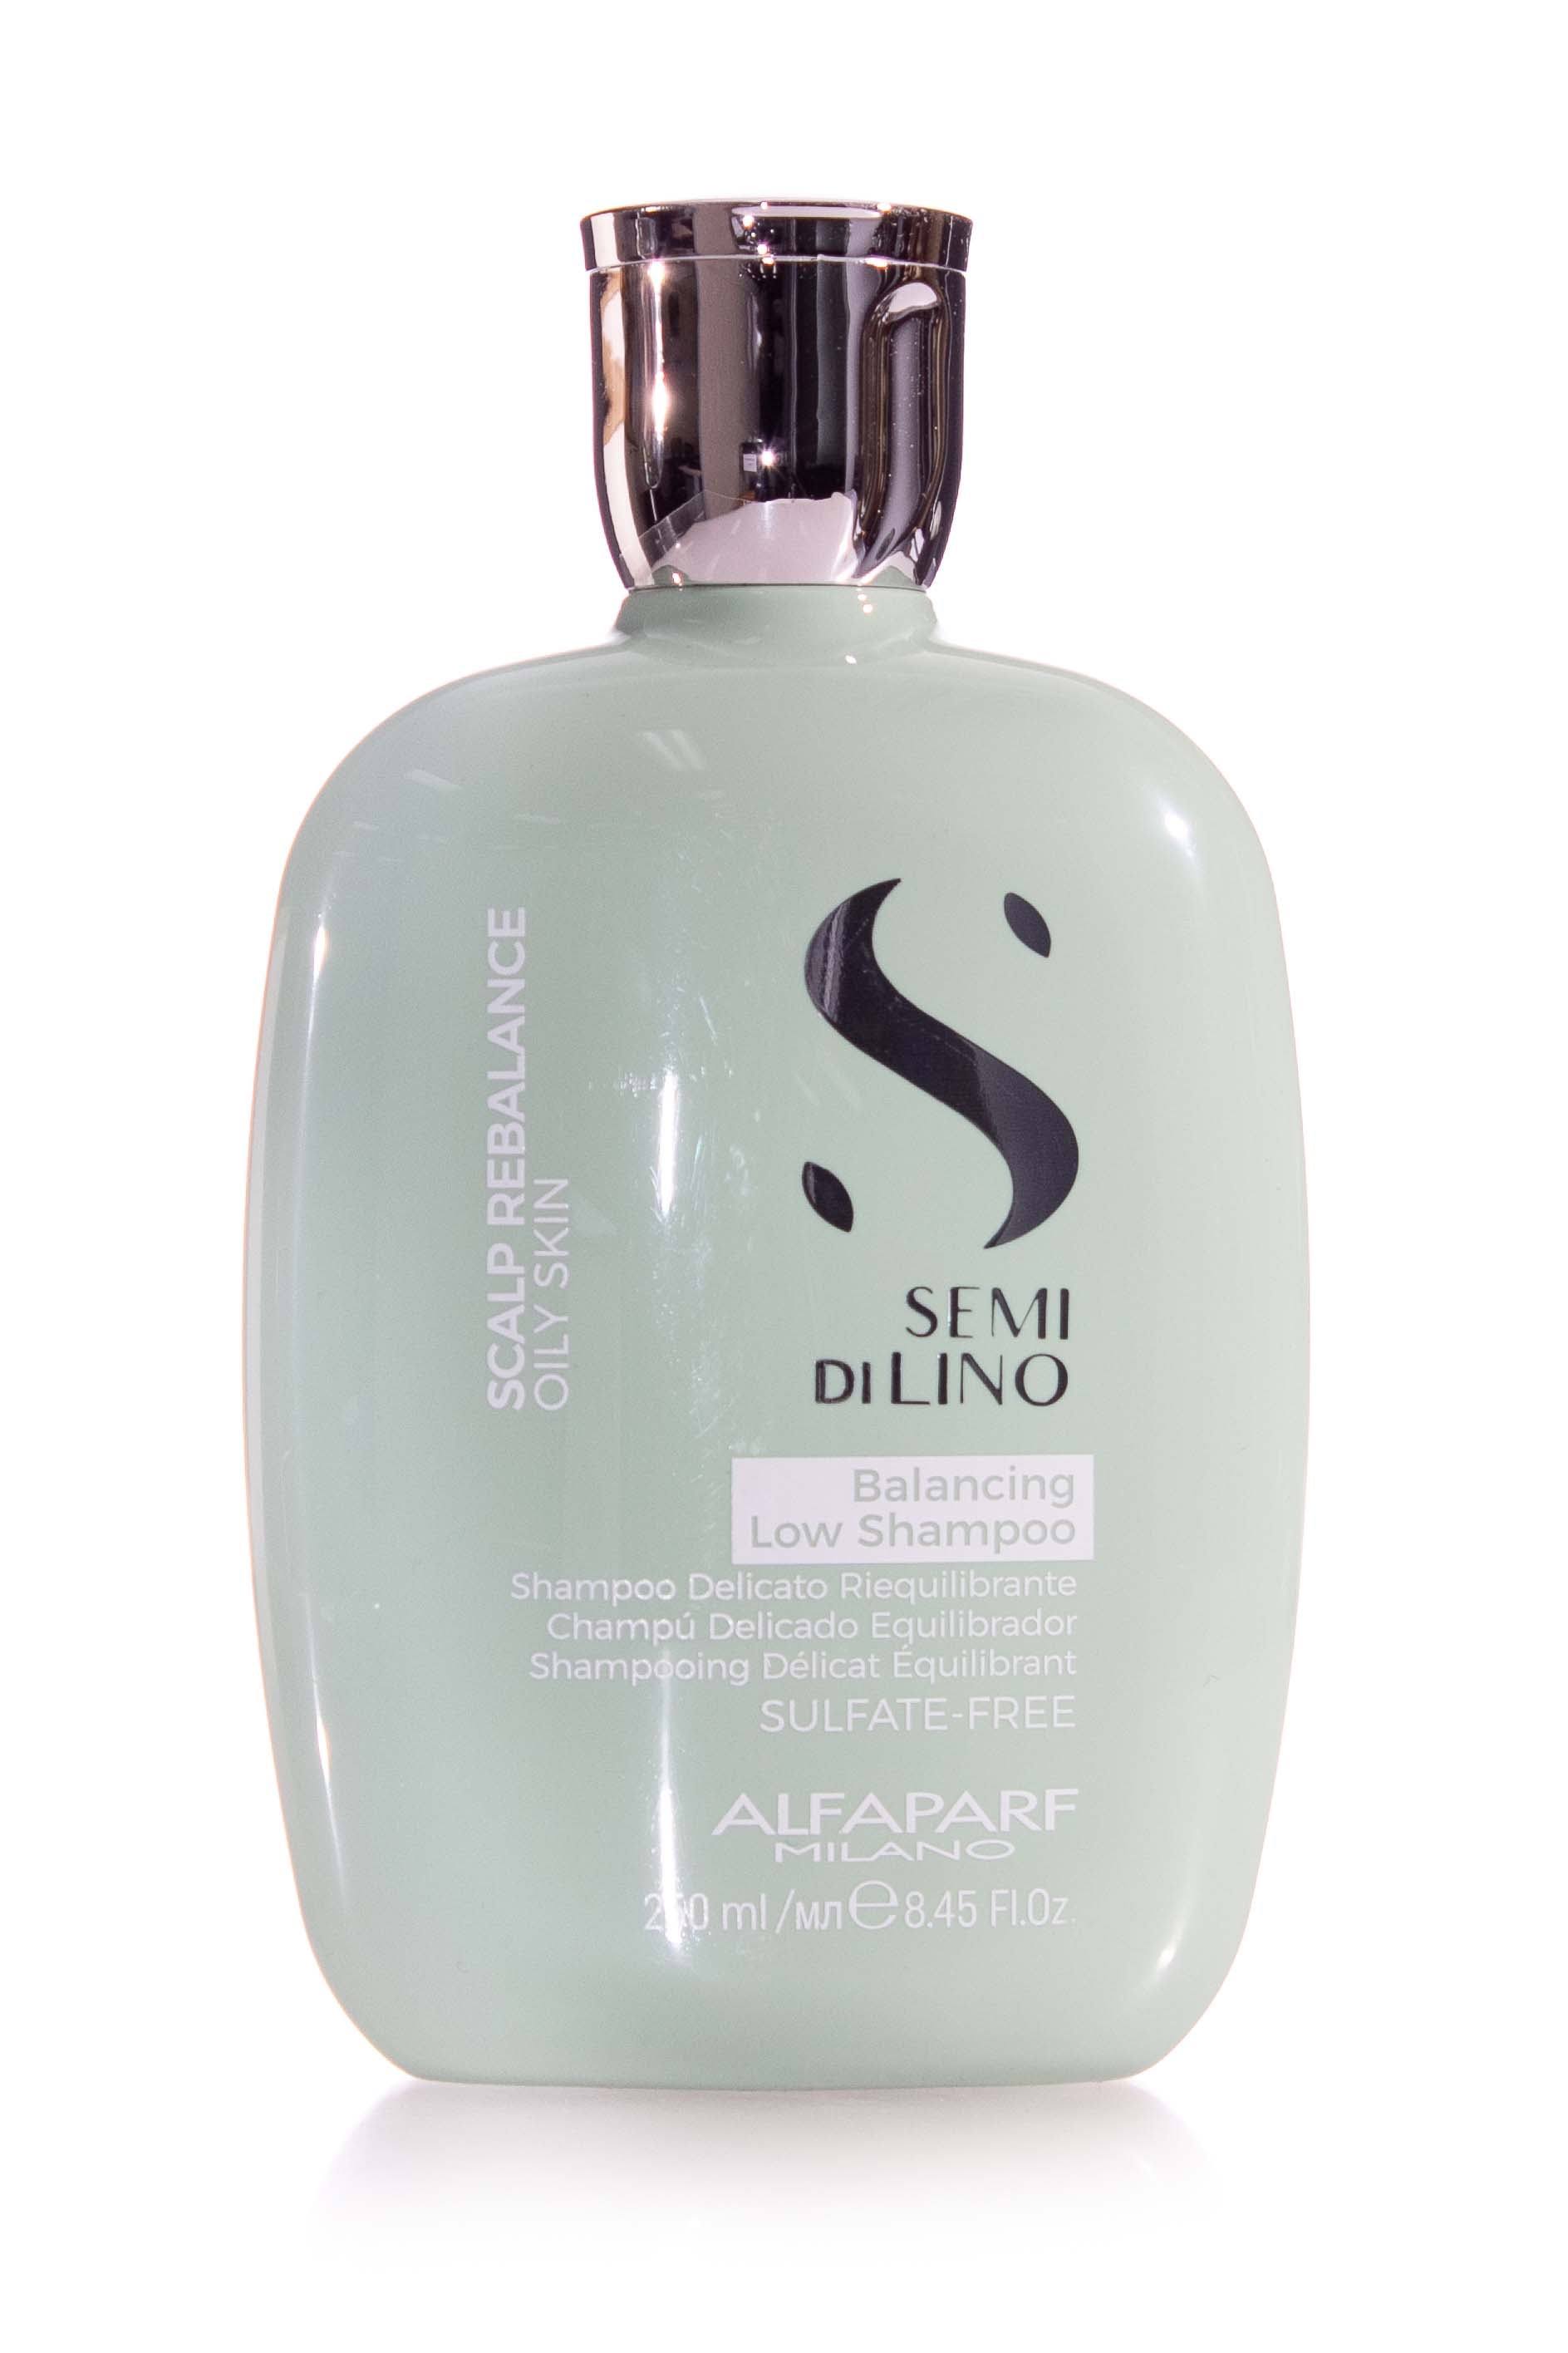 ALFAPARF SEMI DI LINO balancing low shampoo 250 ml